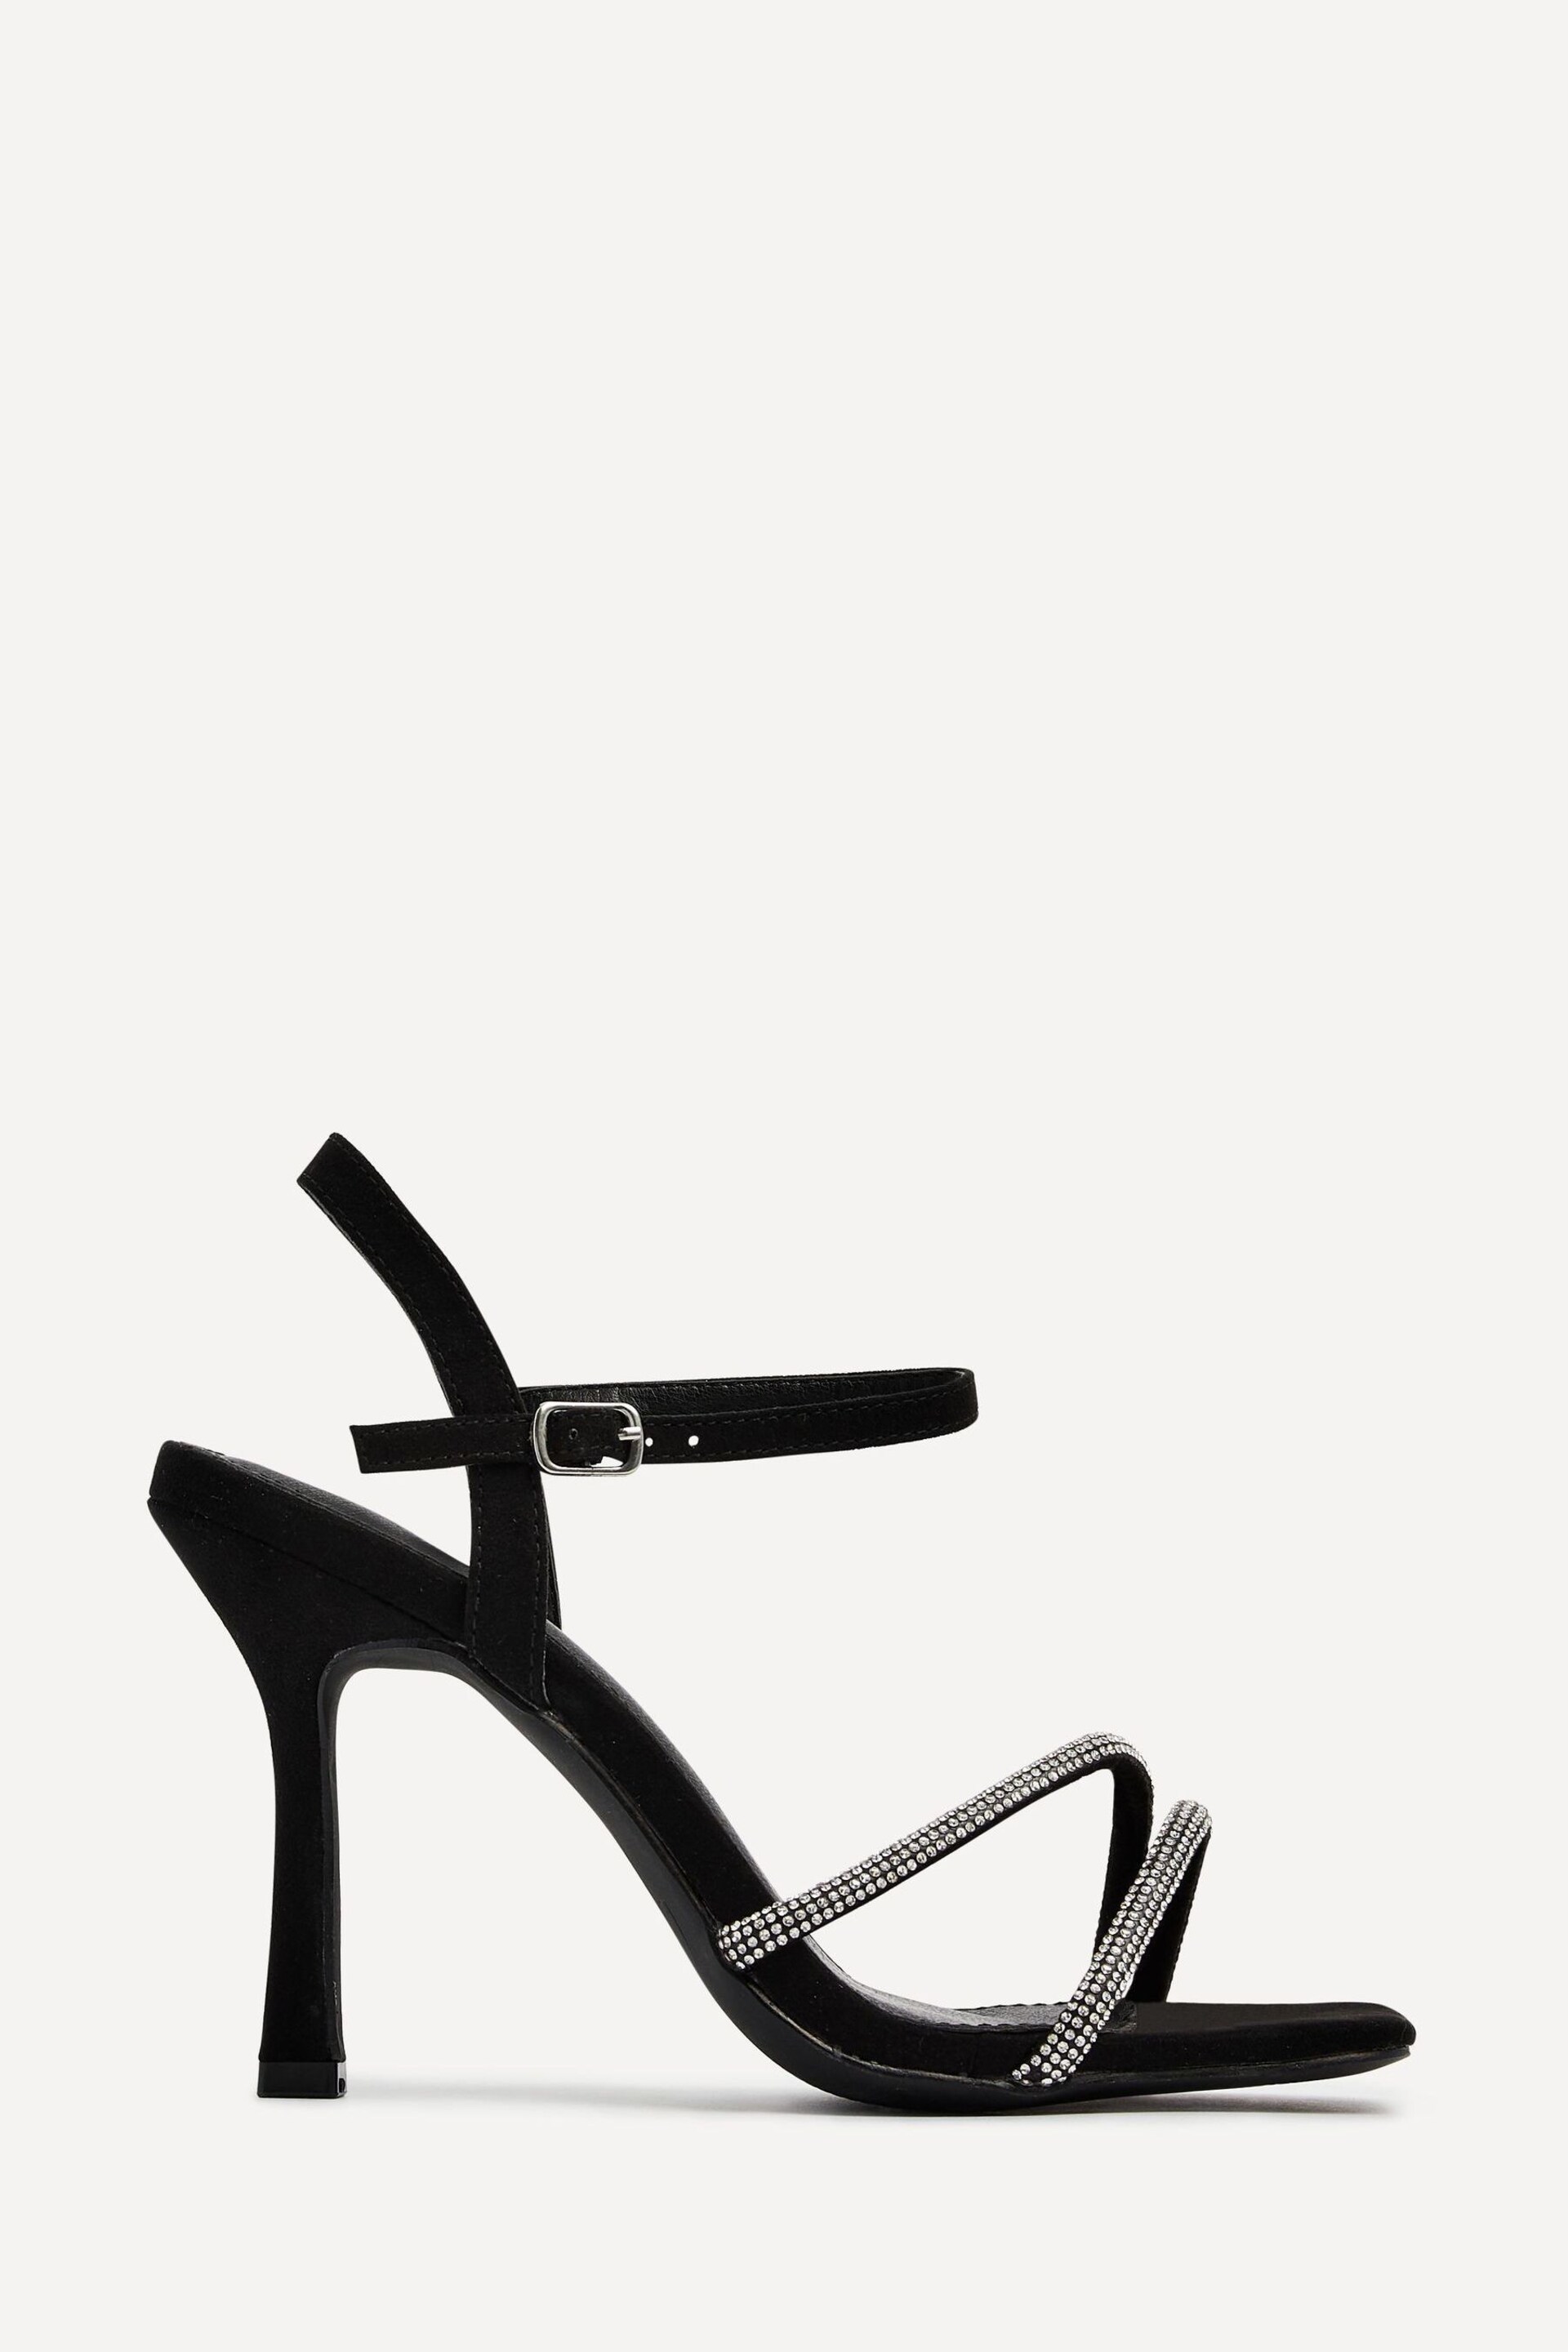 Linzi Black Mesmerized Diamanté Embellished Strappy Heels - Image 2 of 5